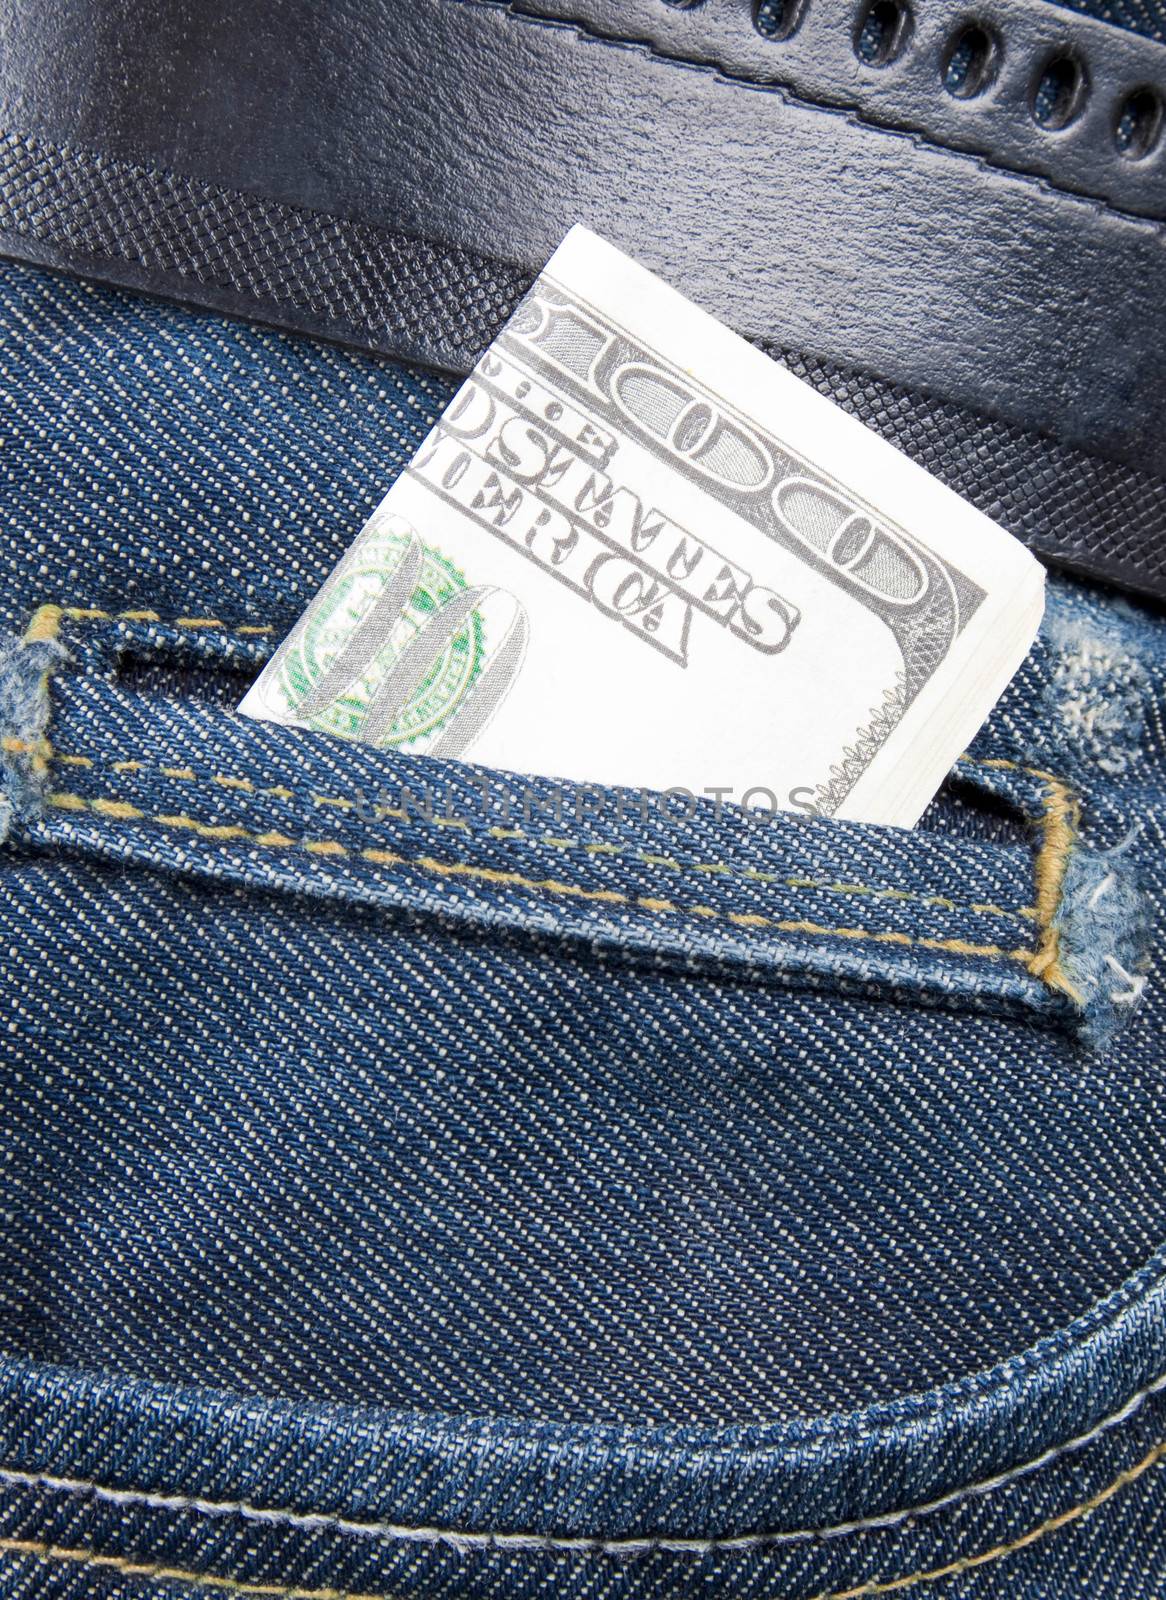 Stack of dollar bills in jeans pocket